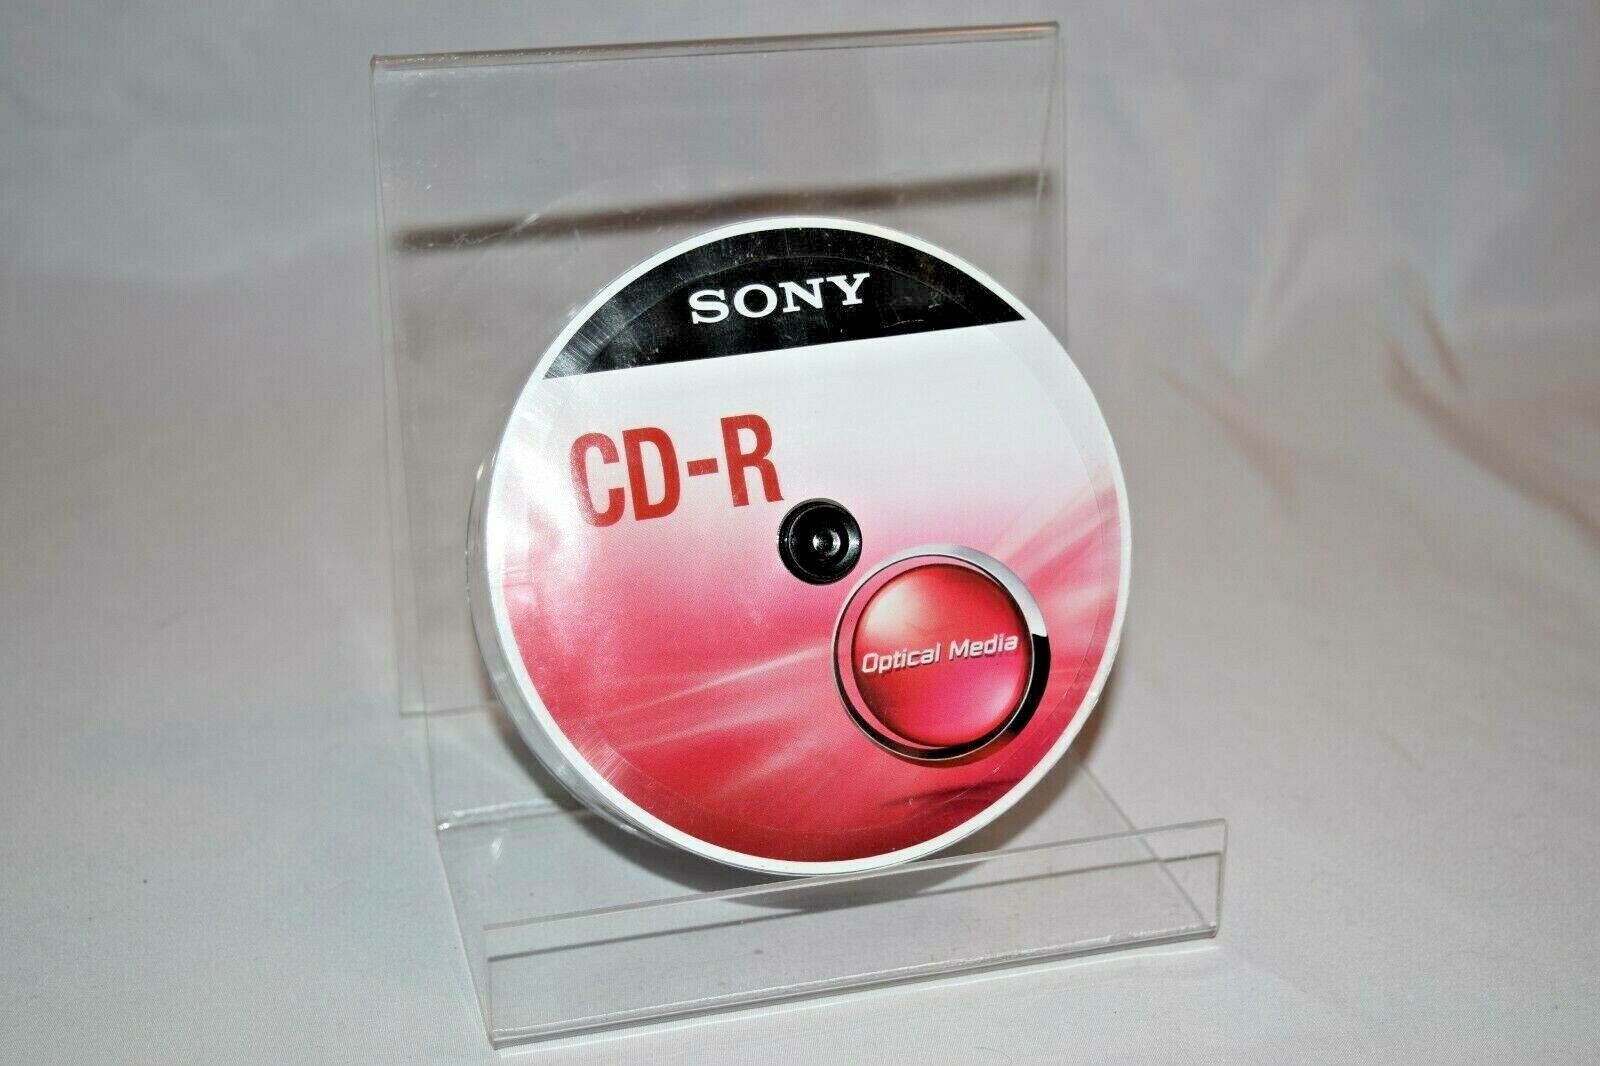 Sony CD-R 700MB Optical Media 30 Pack 30CDQ80XP